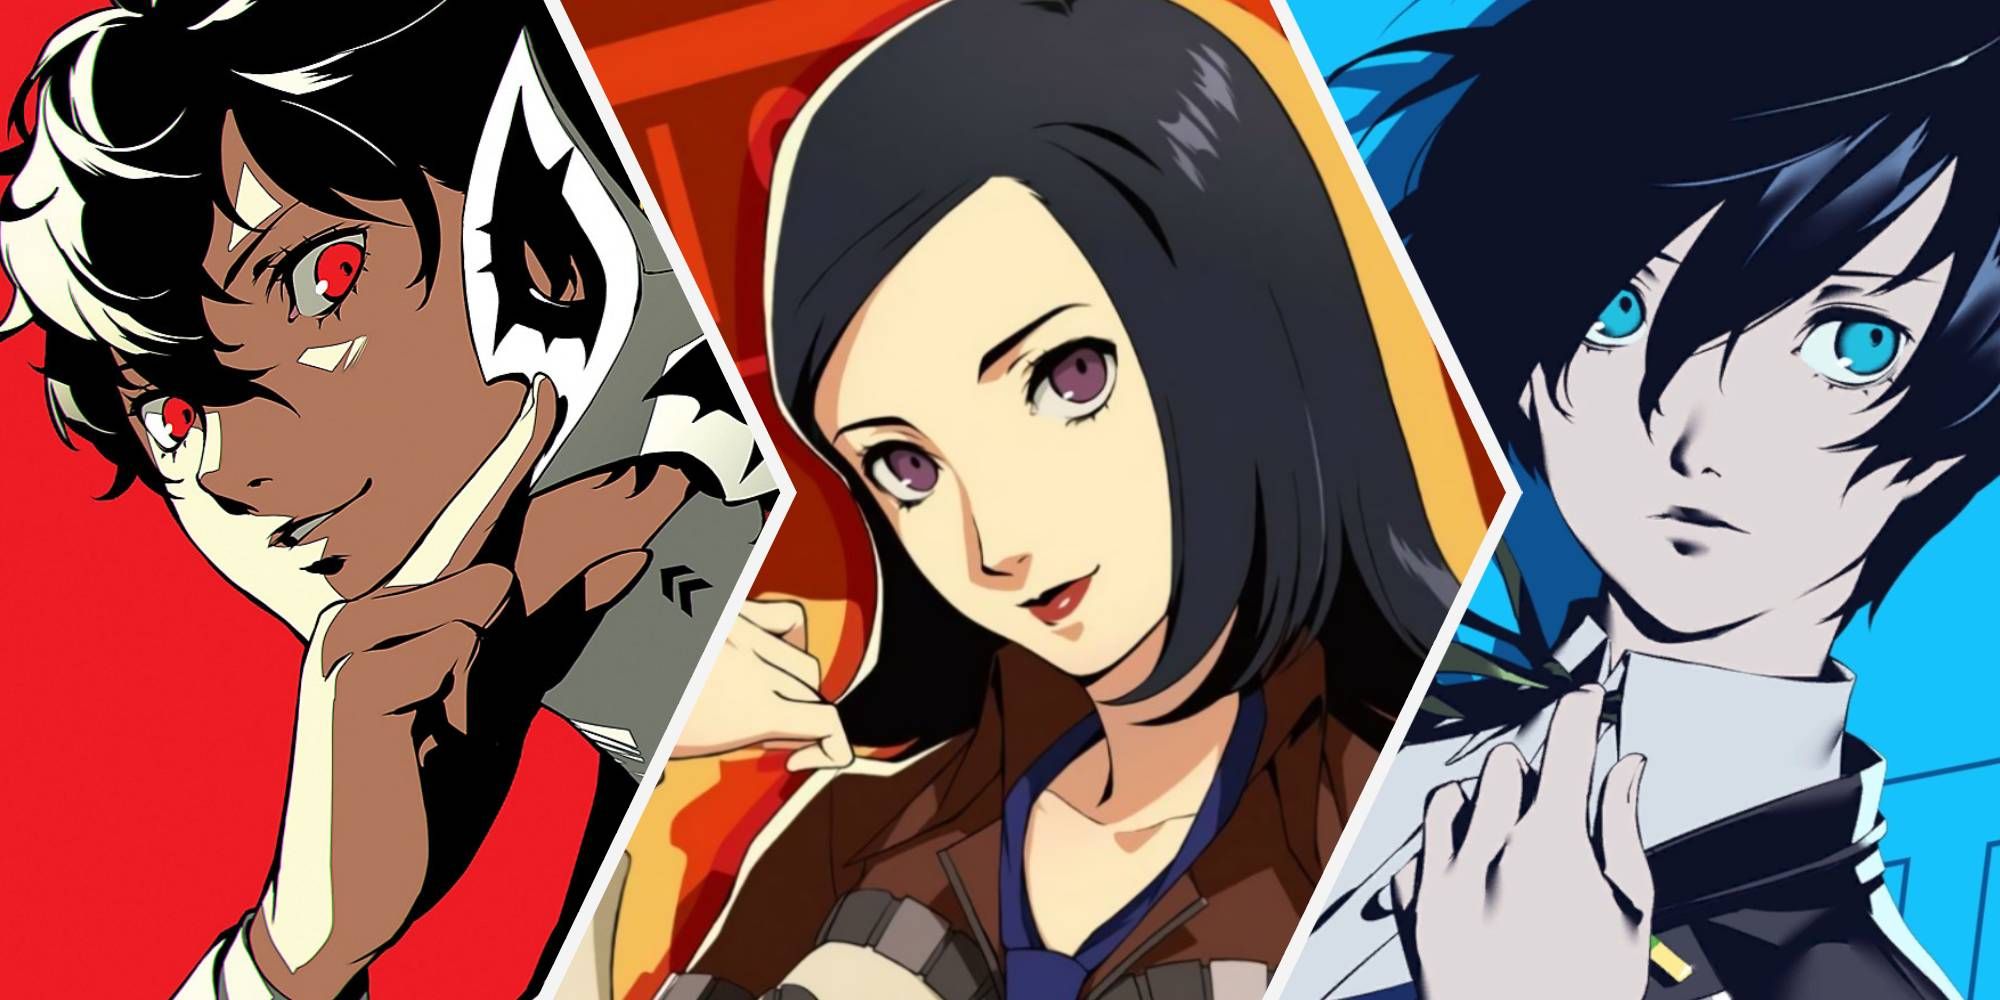 Persona characters Joker, Maya, and Makoto